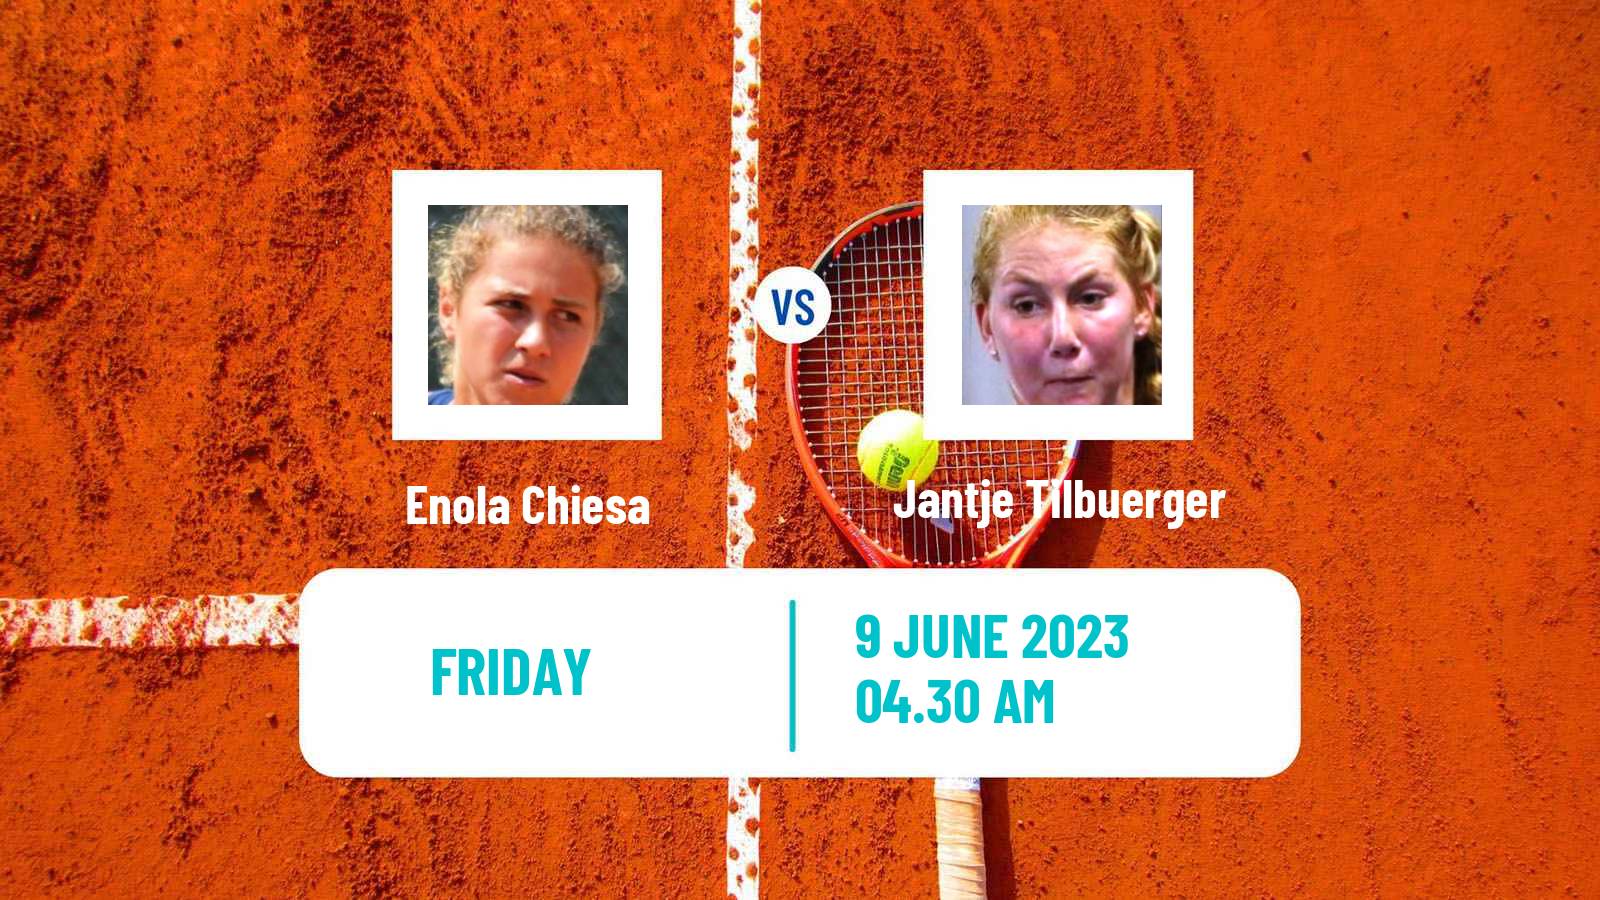 Tennis ITF W15 Kocevje Women Enola Chiesa - Jantje Tilbuerger